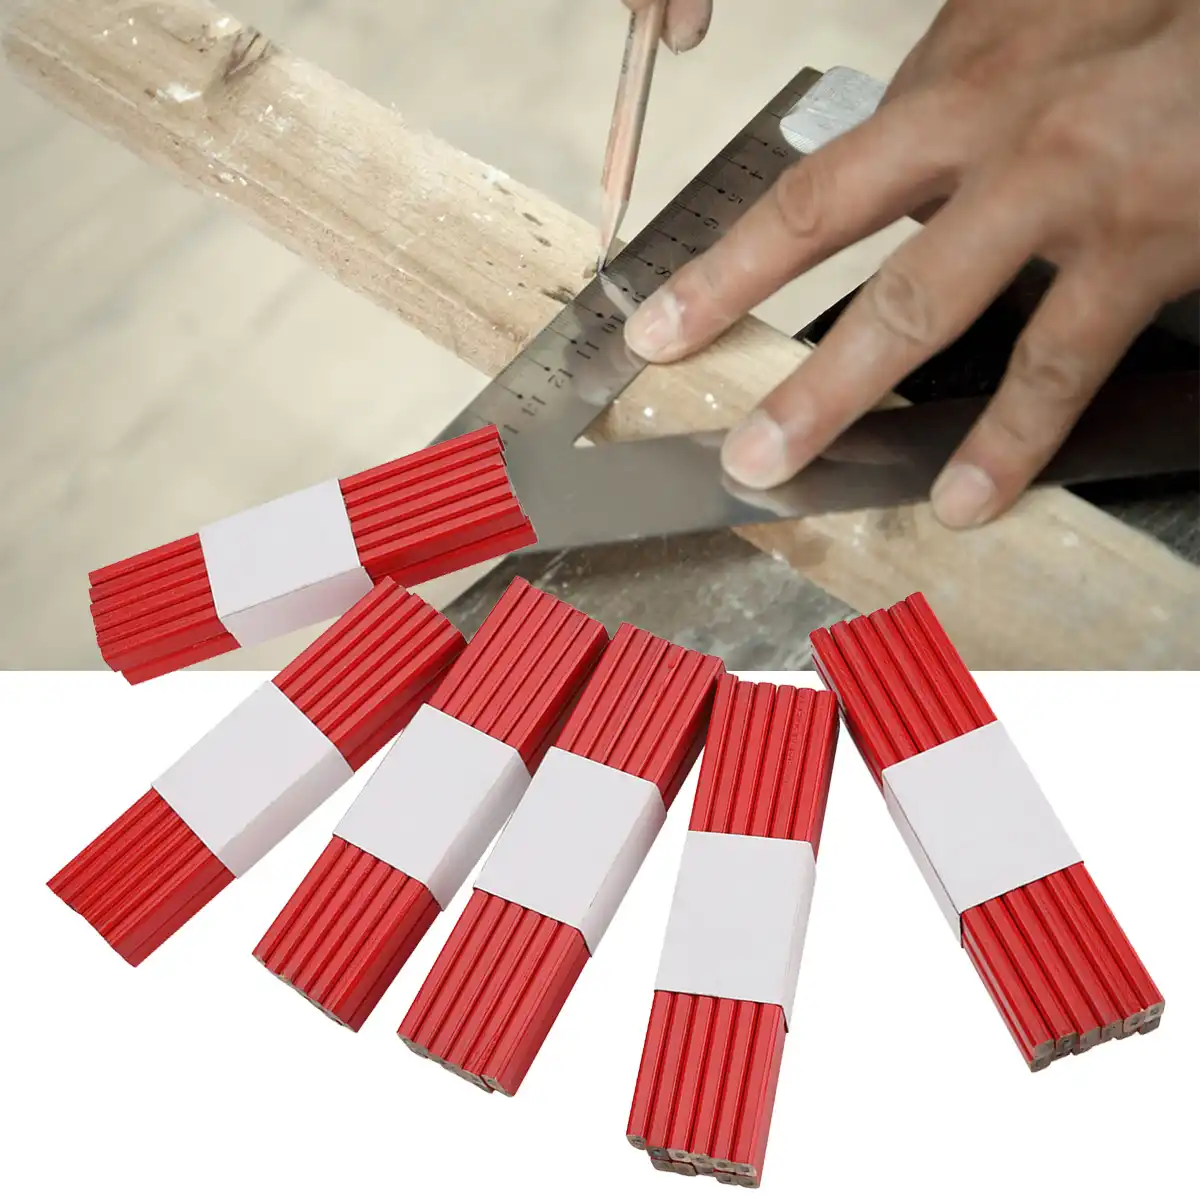 Marking Tool,175mm Octagonal Red Hard Black Lead Carpenter Pencil Woodworking Marking Tool 72Pcs//Pack